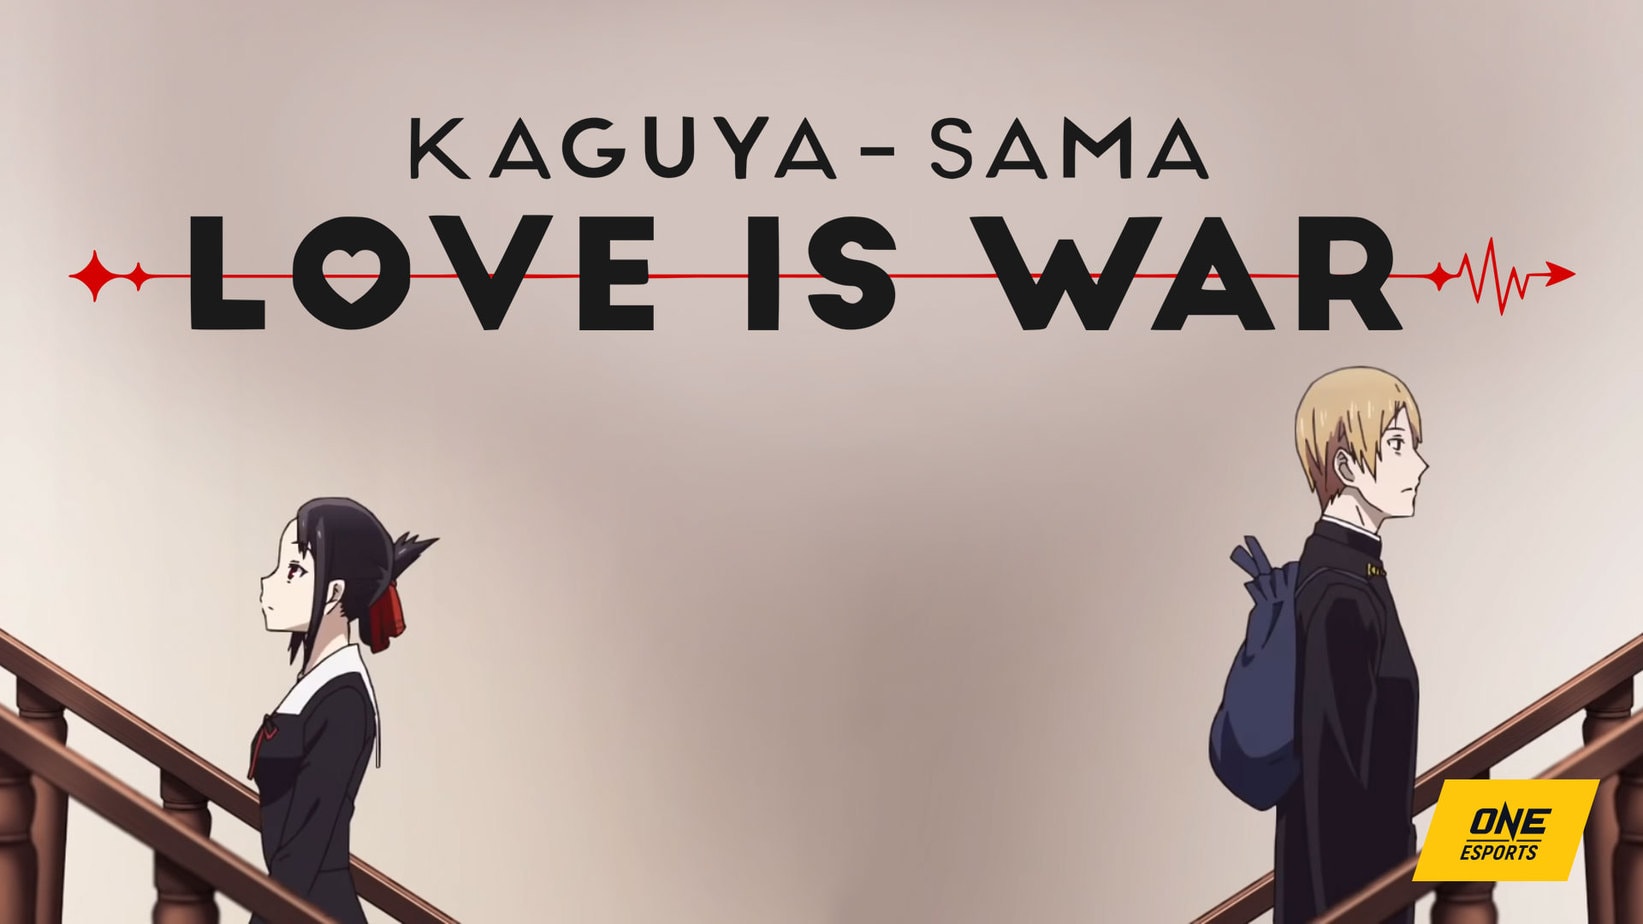 Kaguya-sama season 3 anime: Release date, story, characters